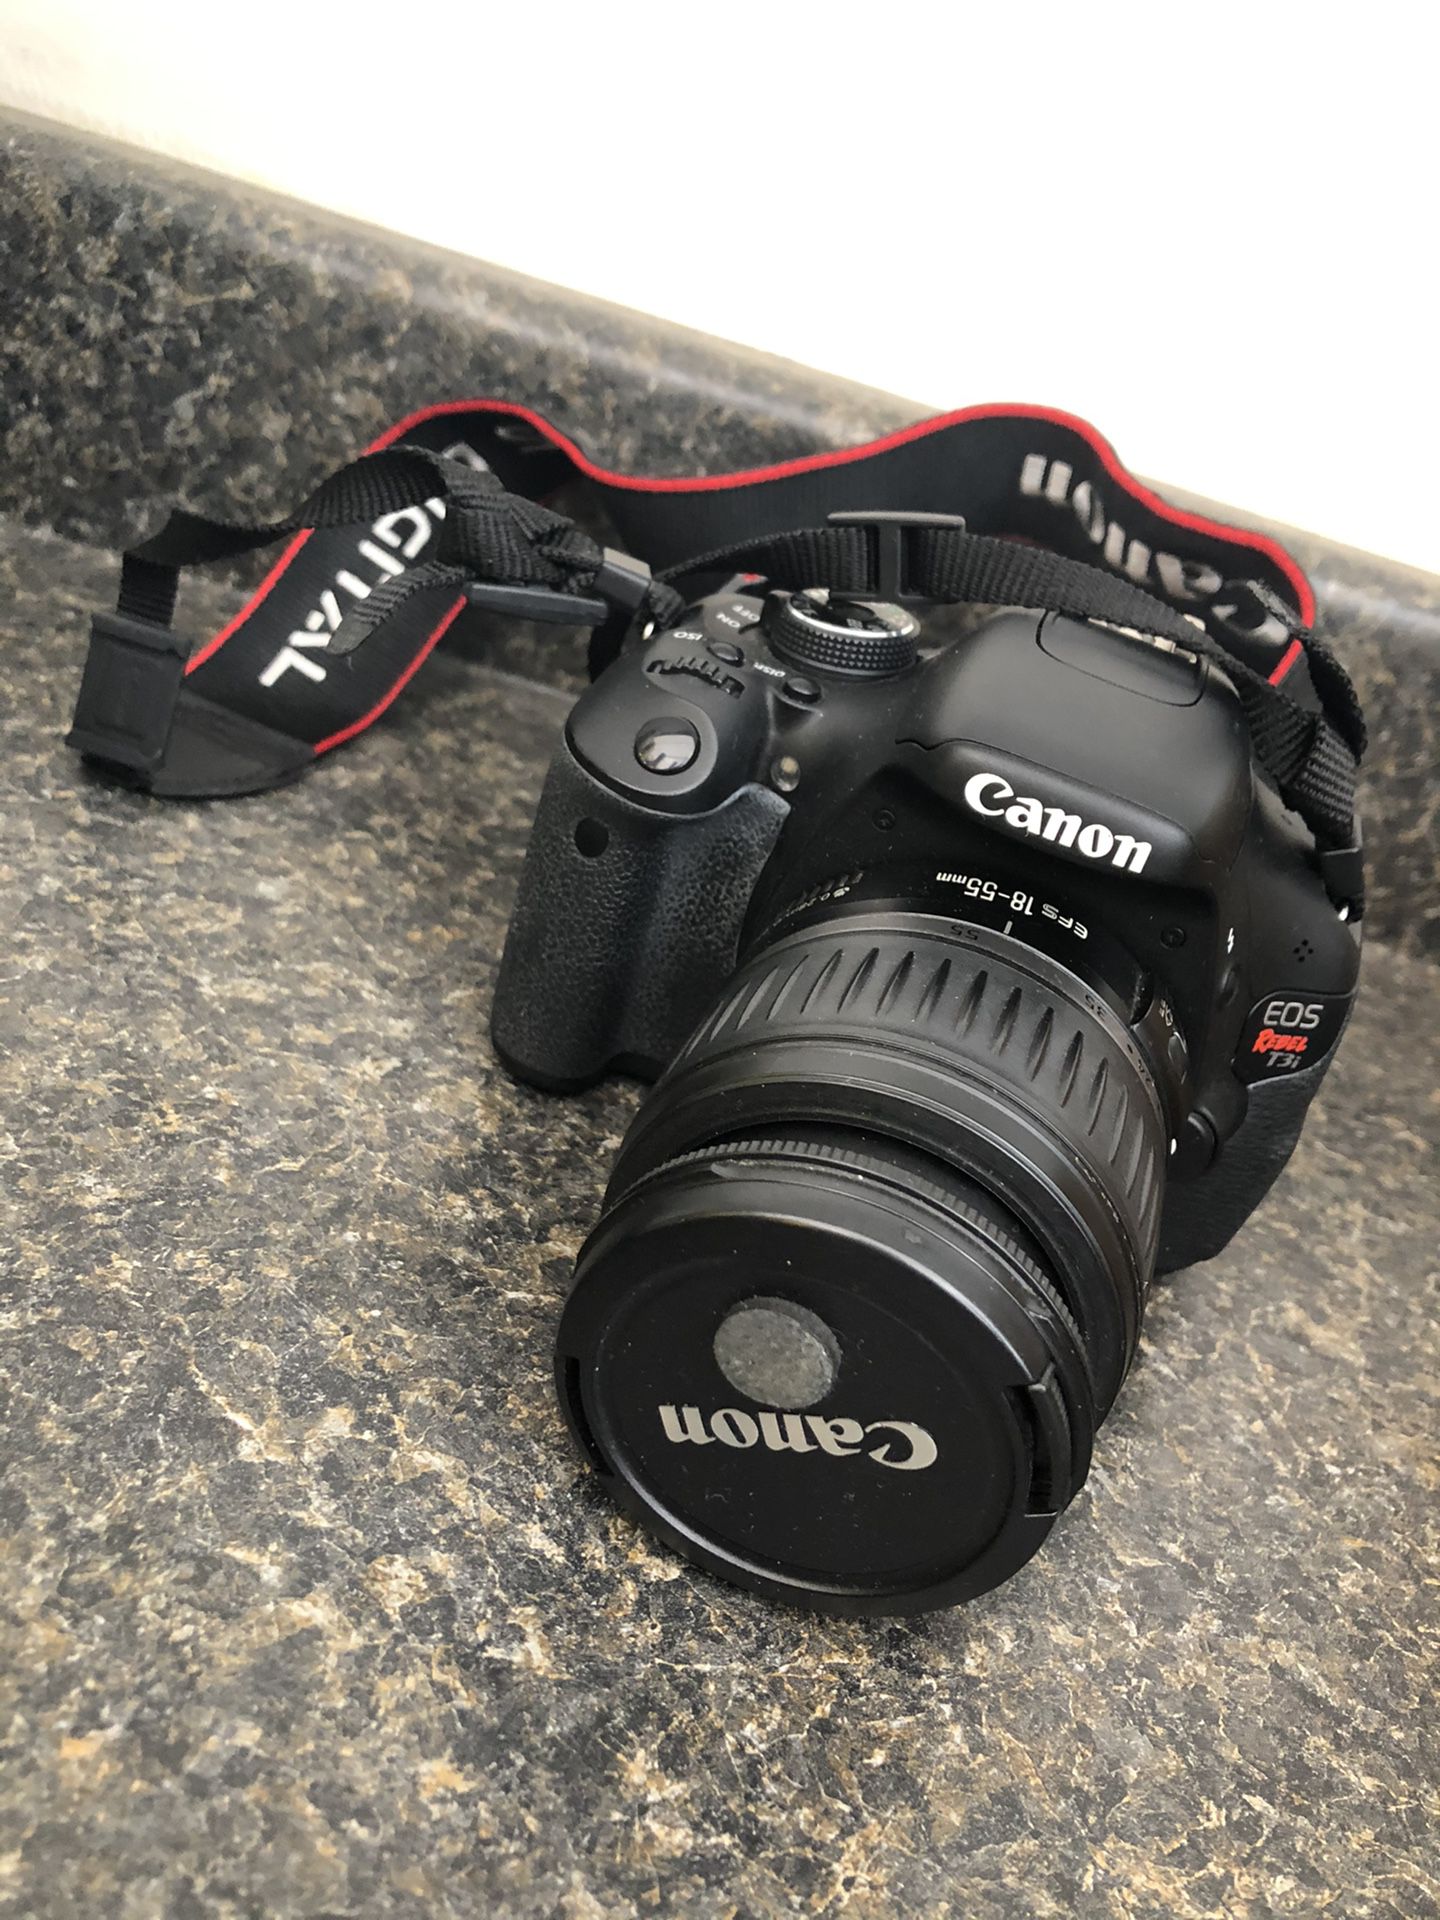 Canon EOS Rebel T3i Digital SLR camera EF-S 18-55mm f:3.5-5.6 IS Lens